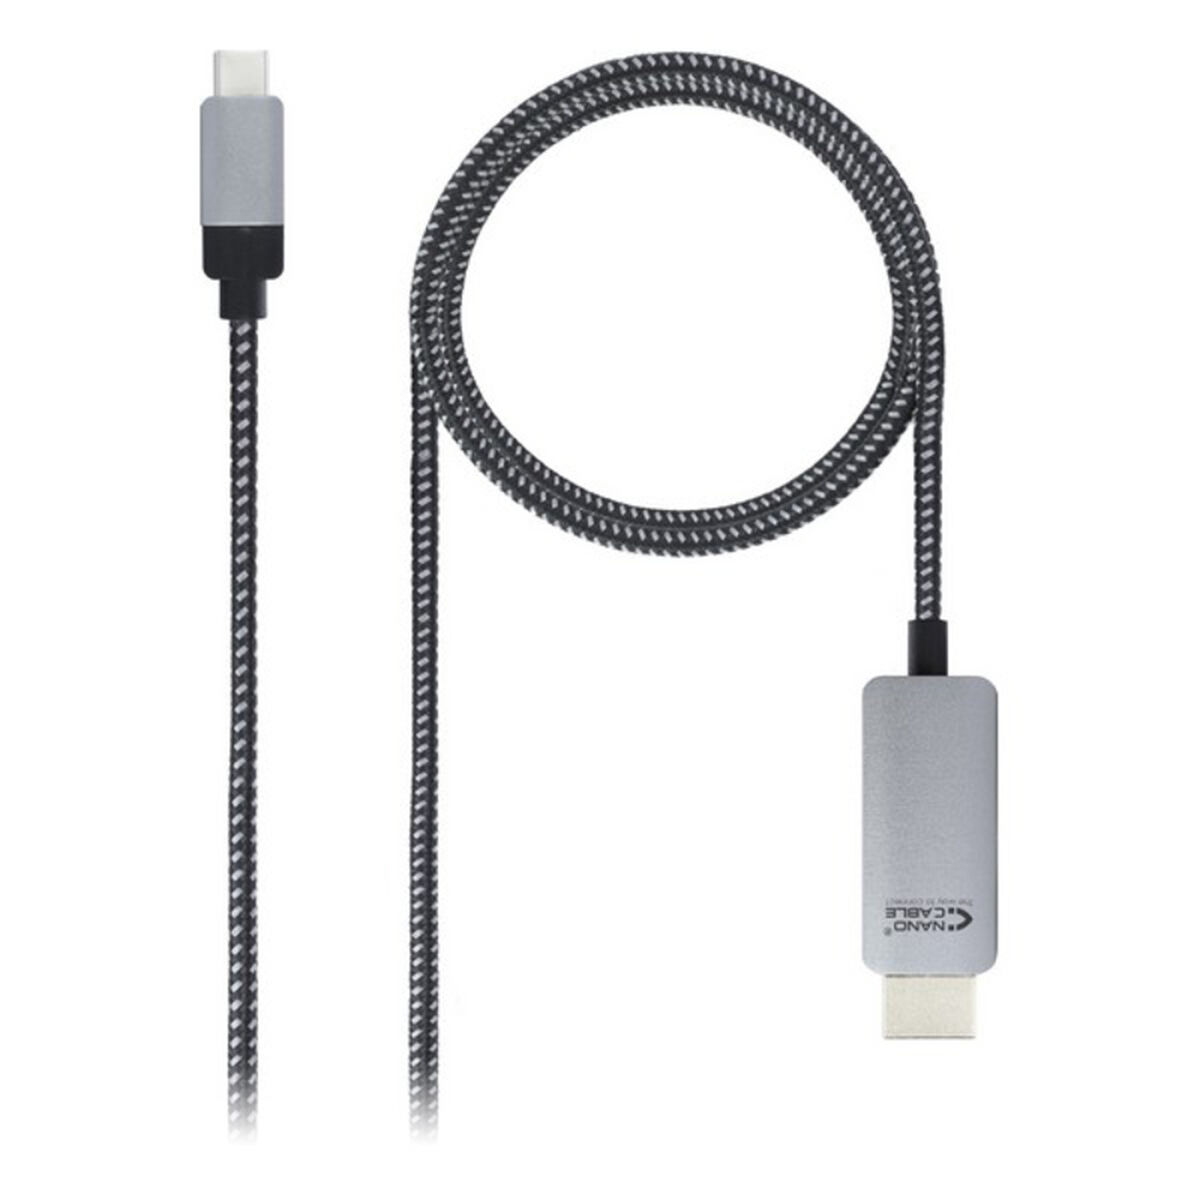 8433, zu NANOCABLE HDMI-Kabel USB C